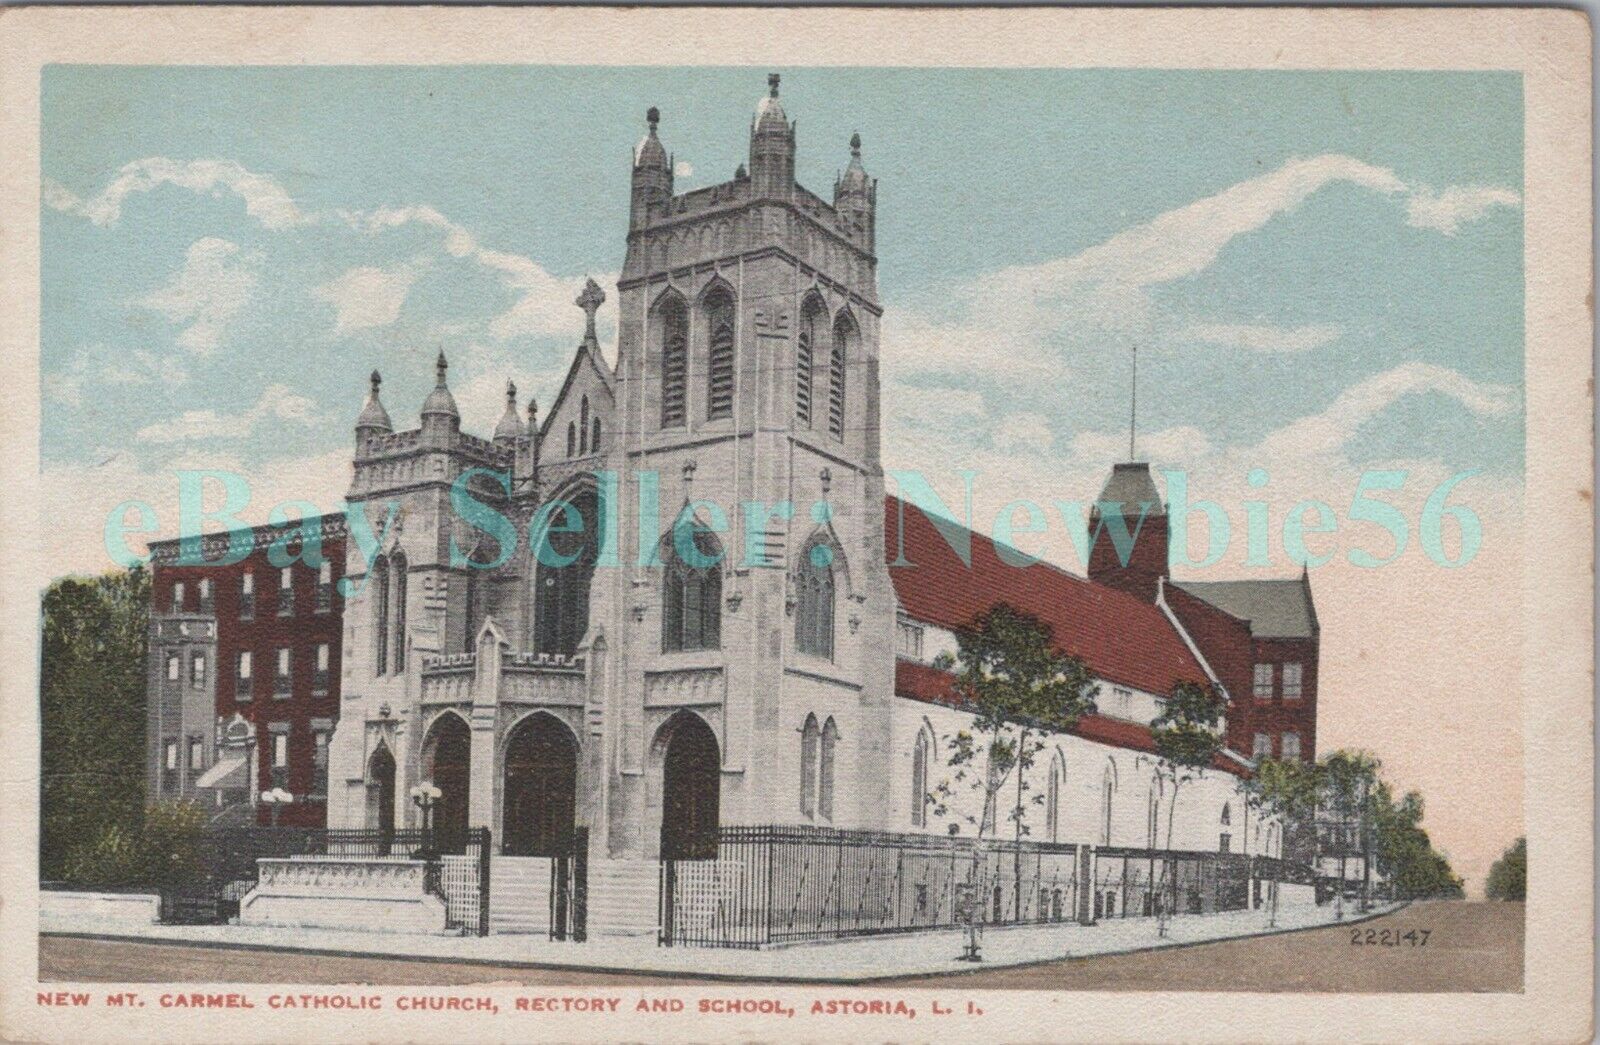 Astoria Queens LI NY - NEW MT CARMEL CATHOLIC HUCRCH & SCHOOL - Postcard